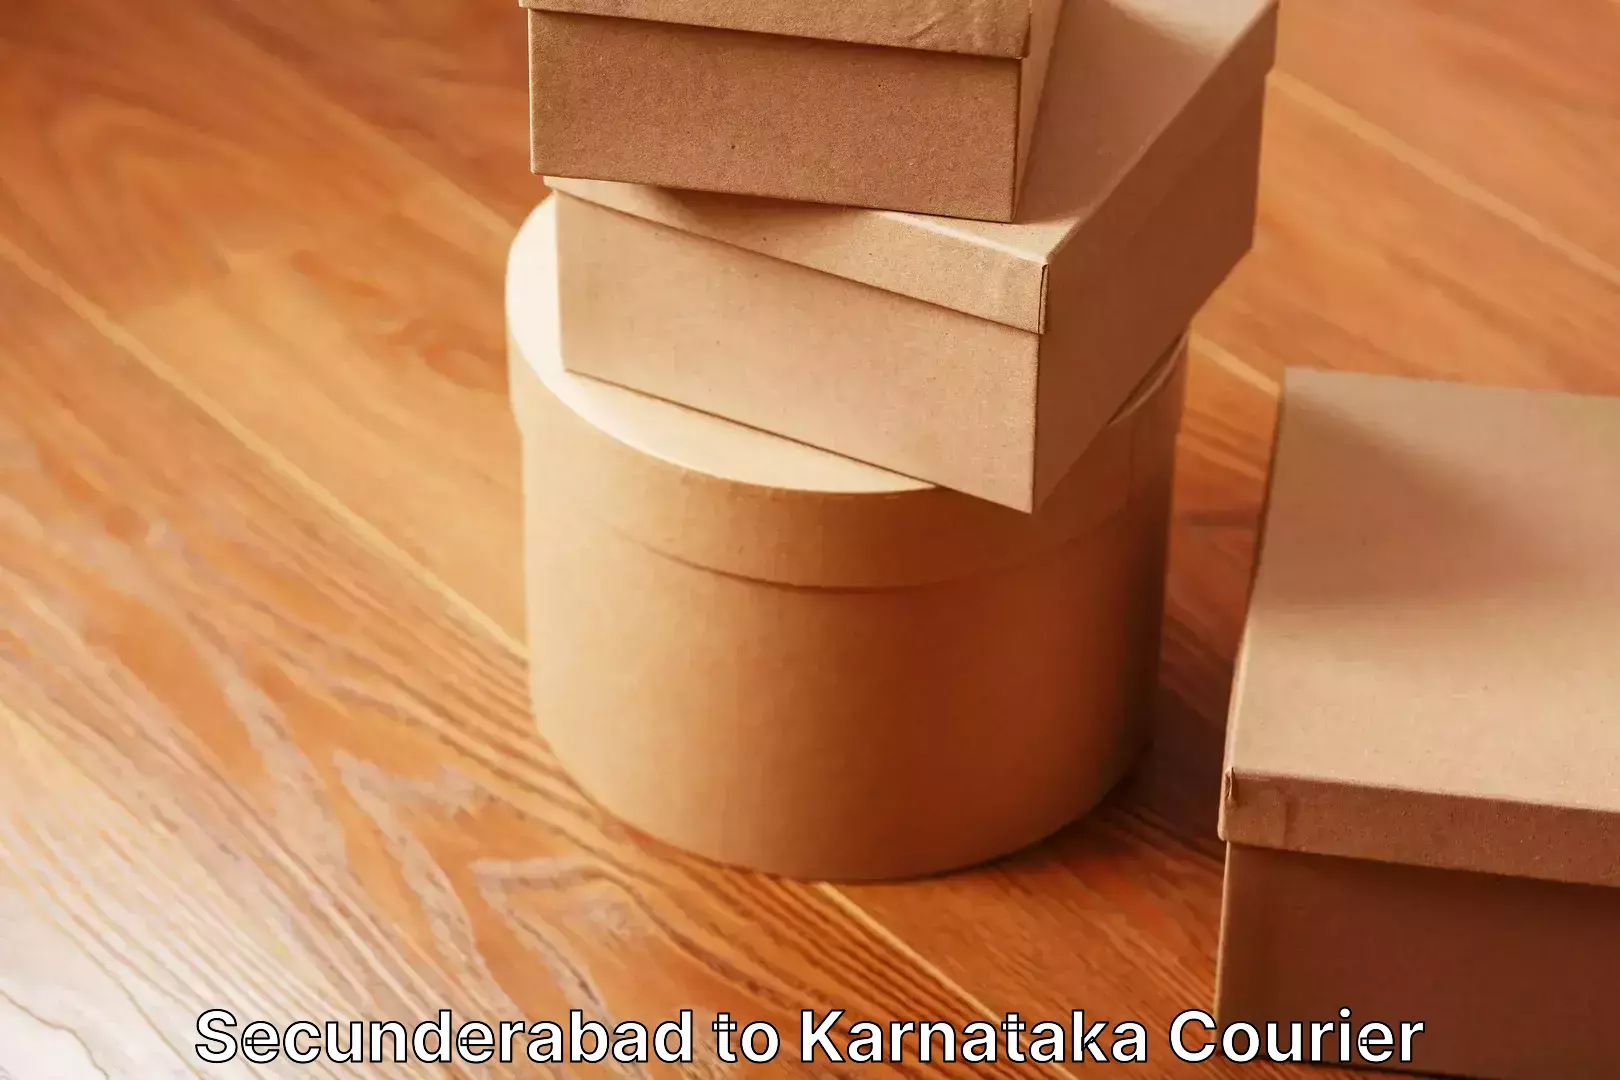 Professional moving company Secunderabad to Karnataka